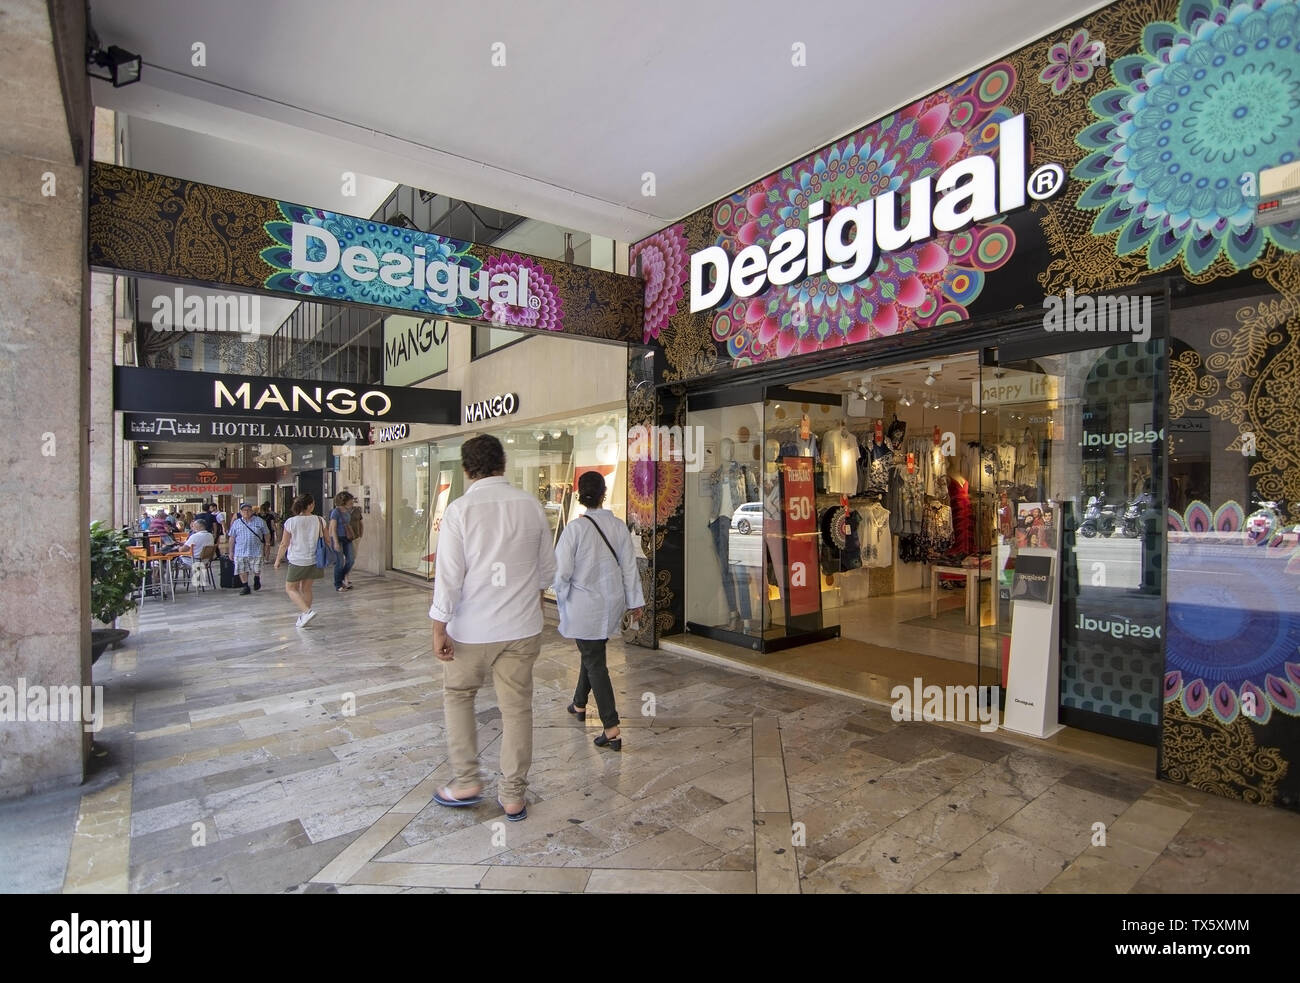 PALMA, MALLORCA, SPAIN - JUNE 22, 2019: Shopping street Jaime III with  wellknown Spanish brand names Desigual and Mango on a sunny day on June 22,  201 Stock Photo - Alamy